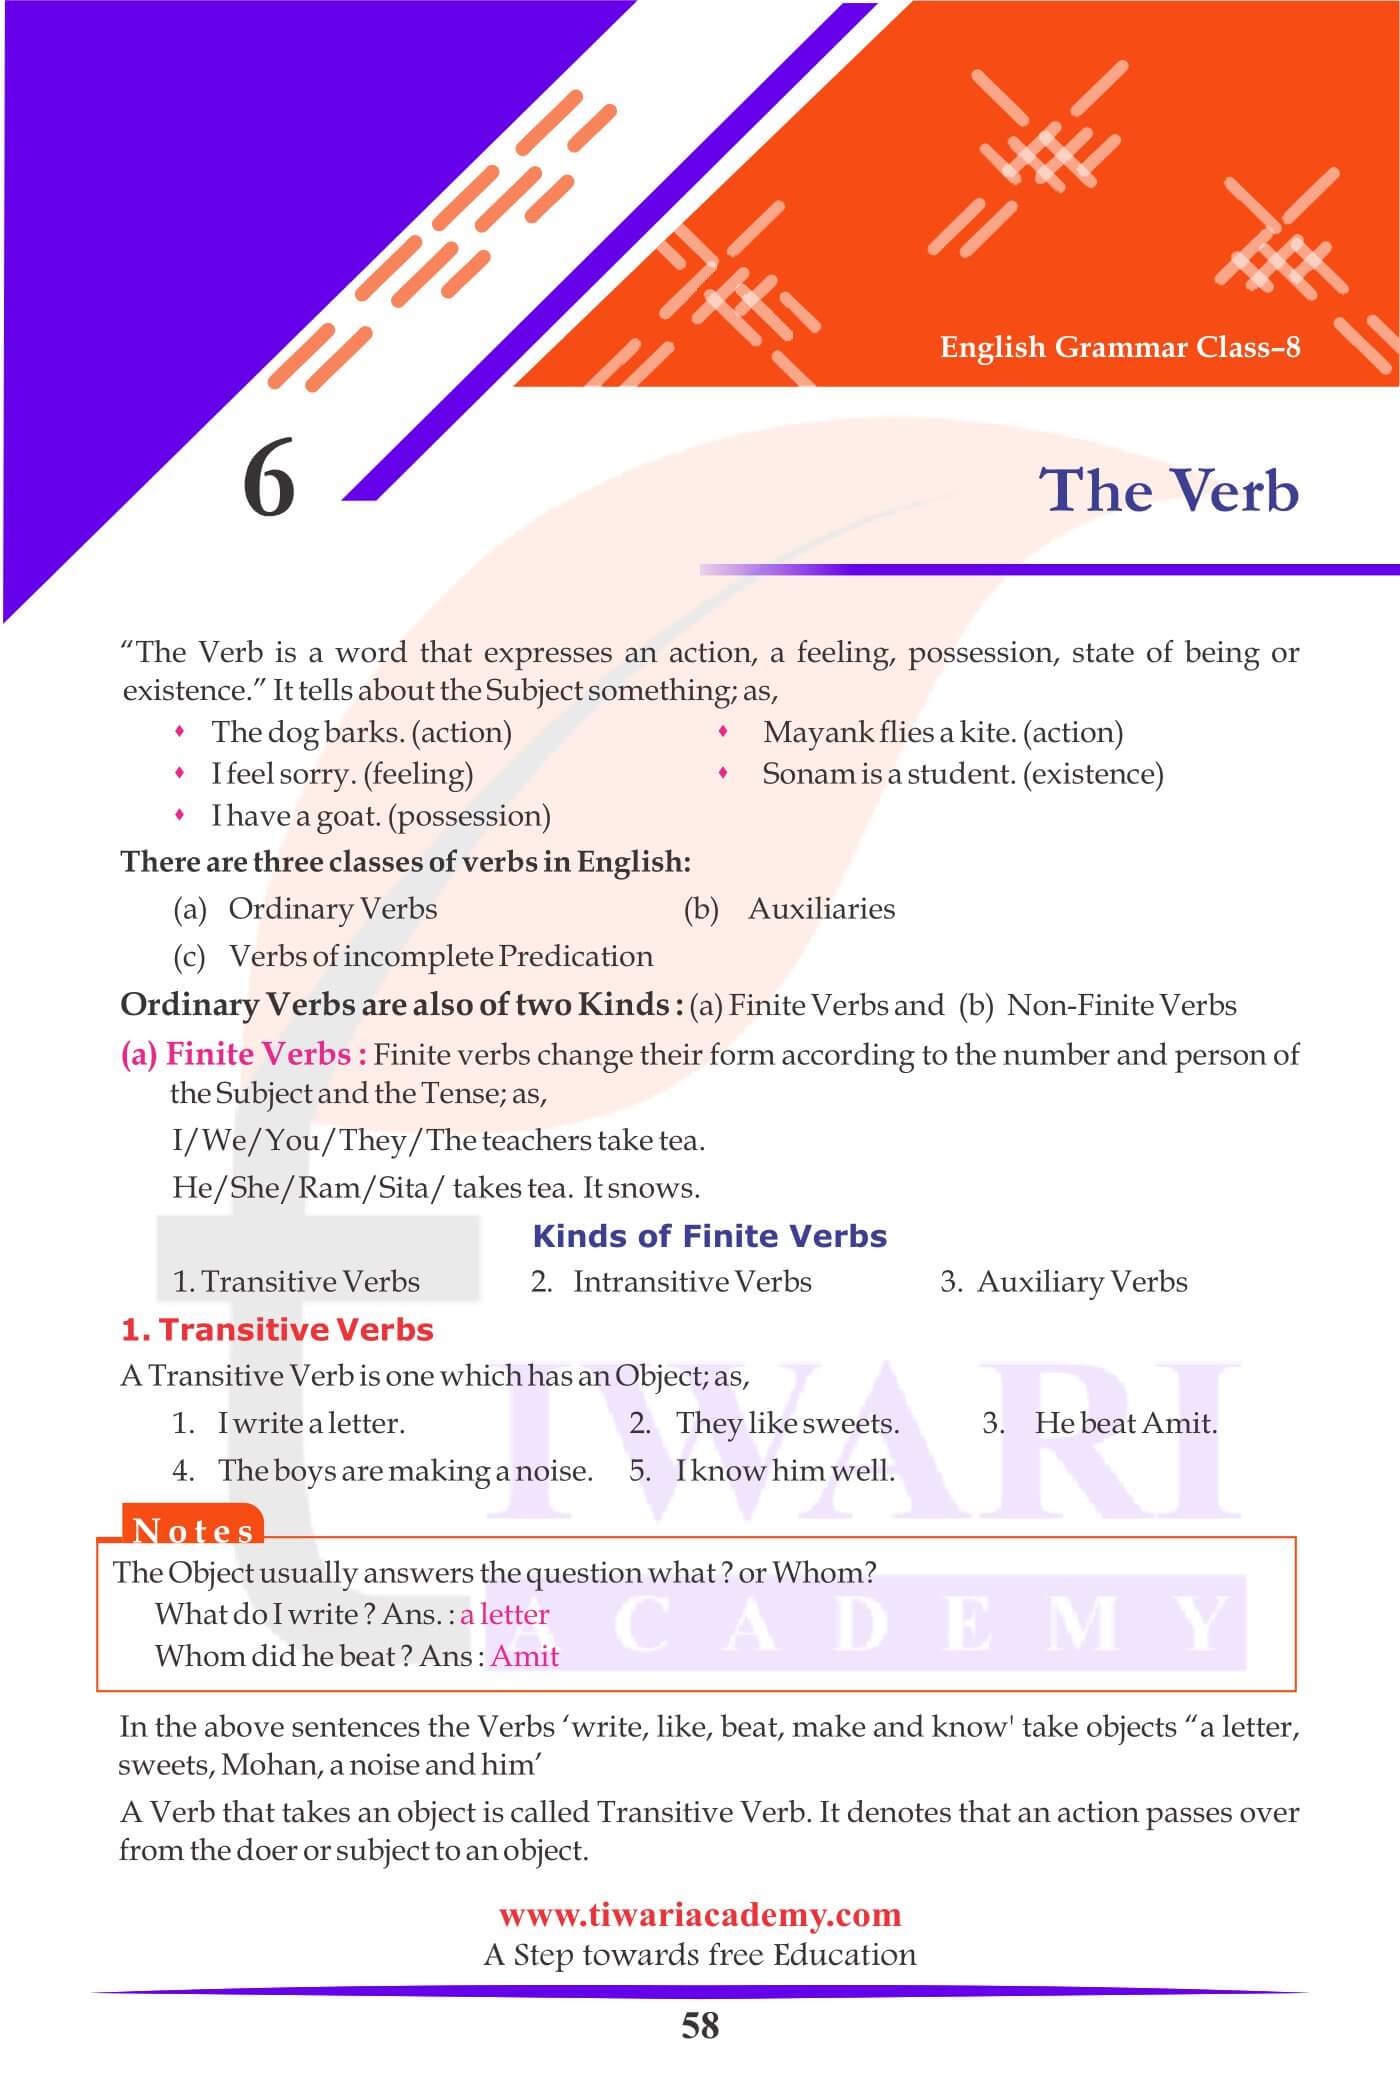 Class 8 English Grammar Chapter 6 The Verb